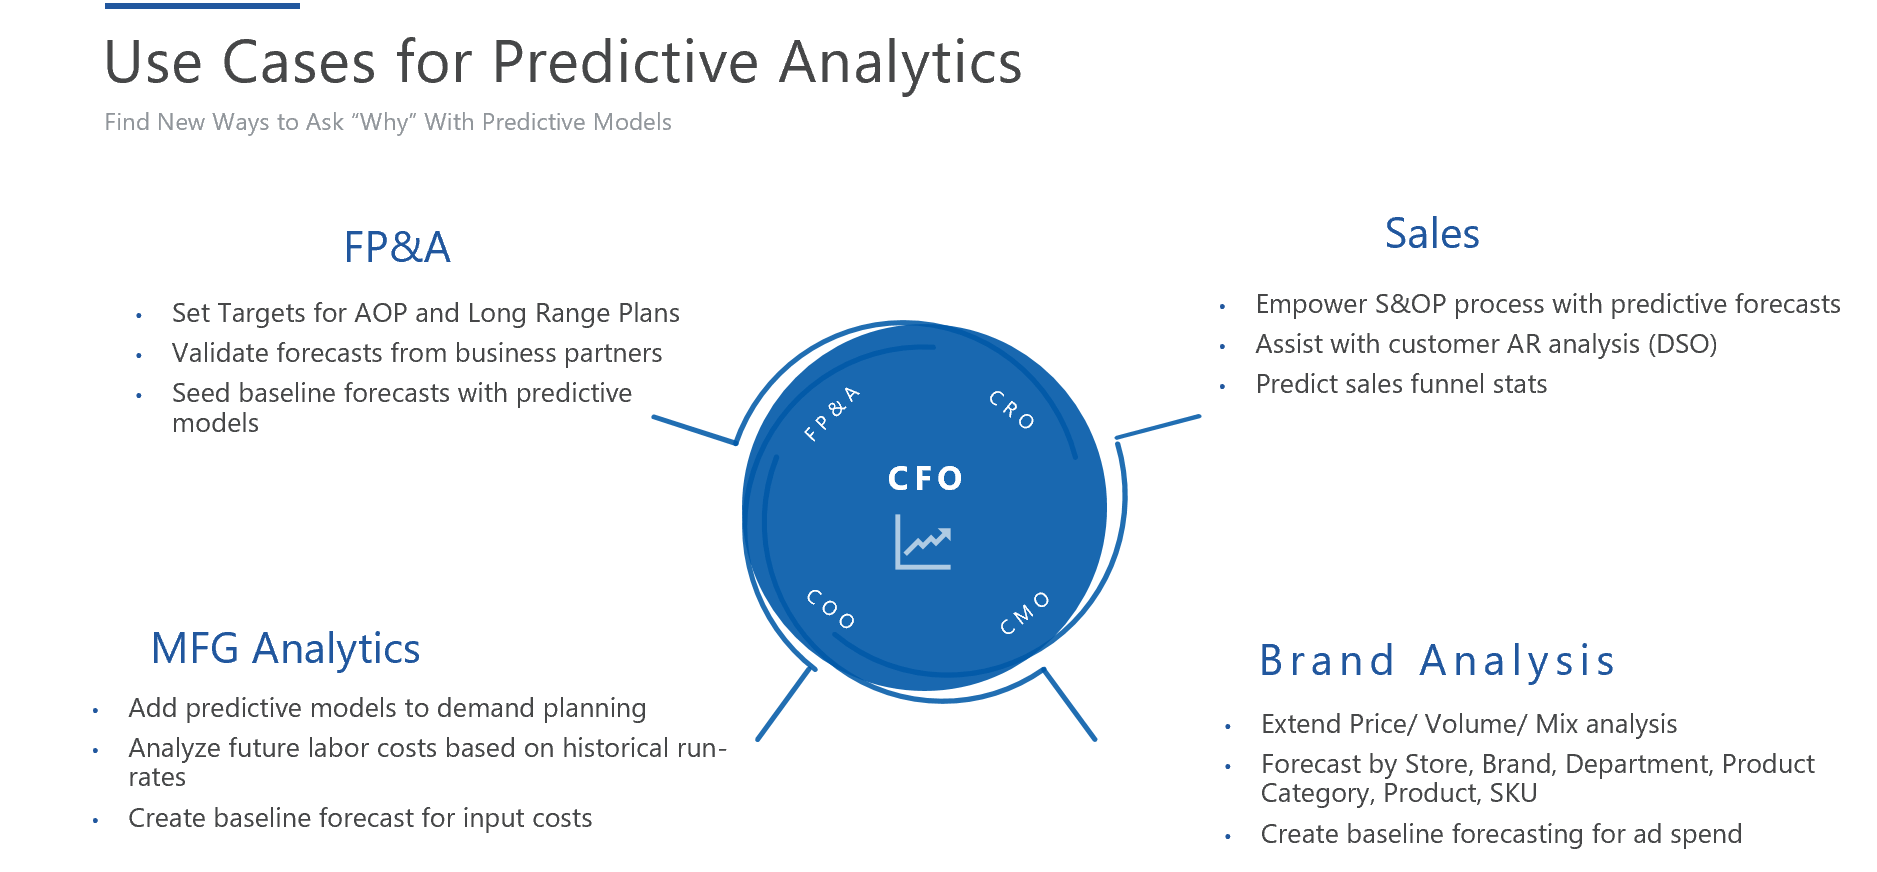 Use Cases for Predictive Analytics